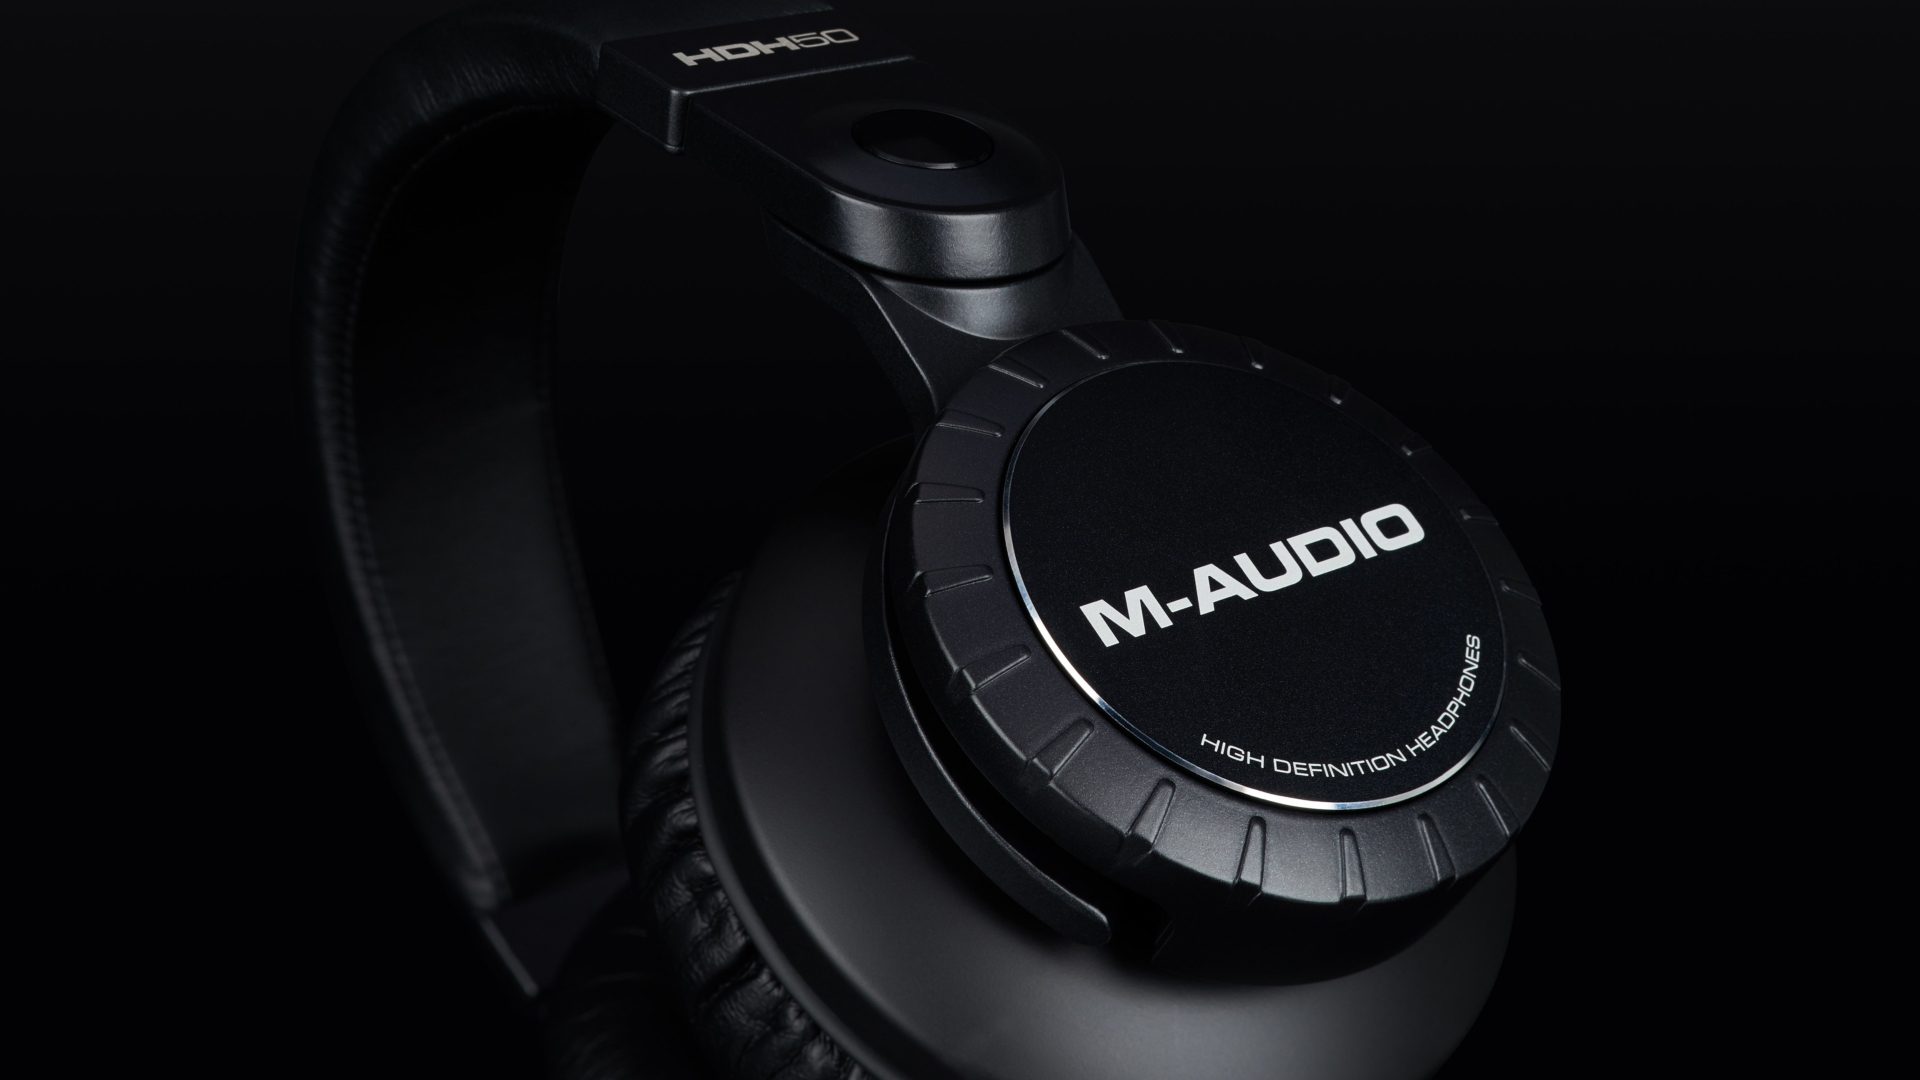 M-Audio HDH50